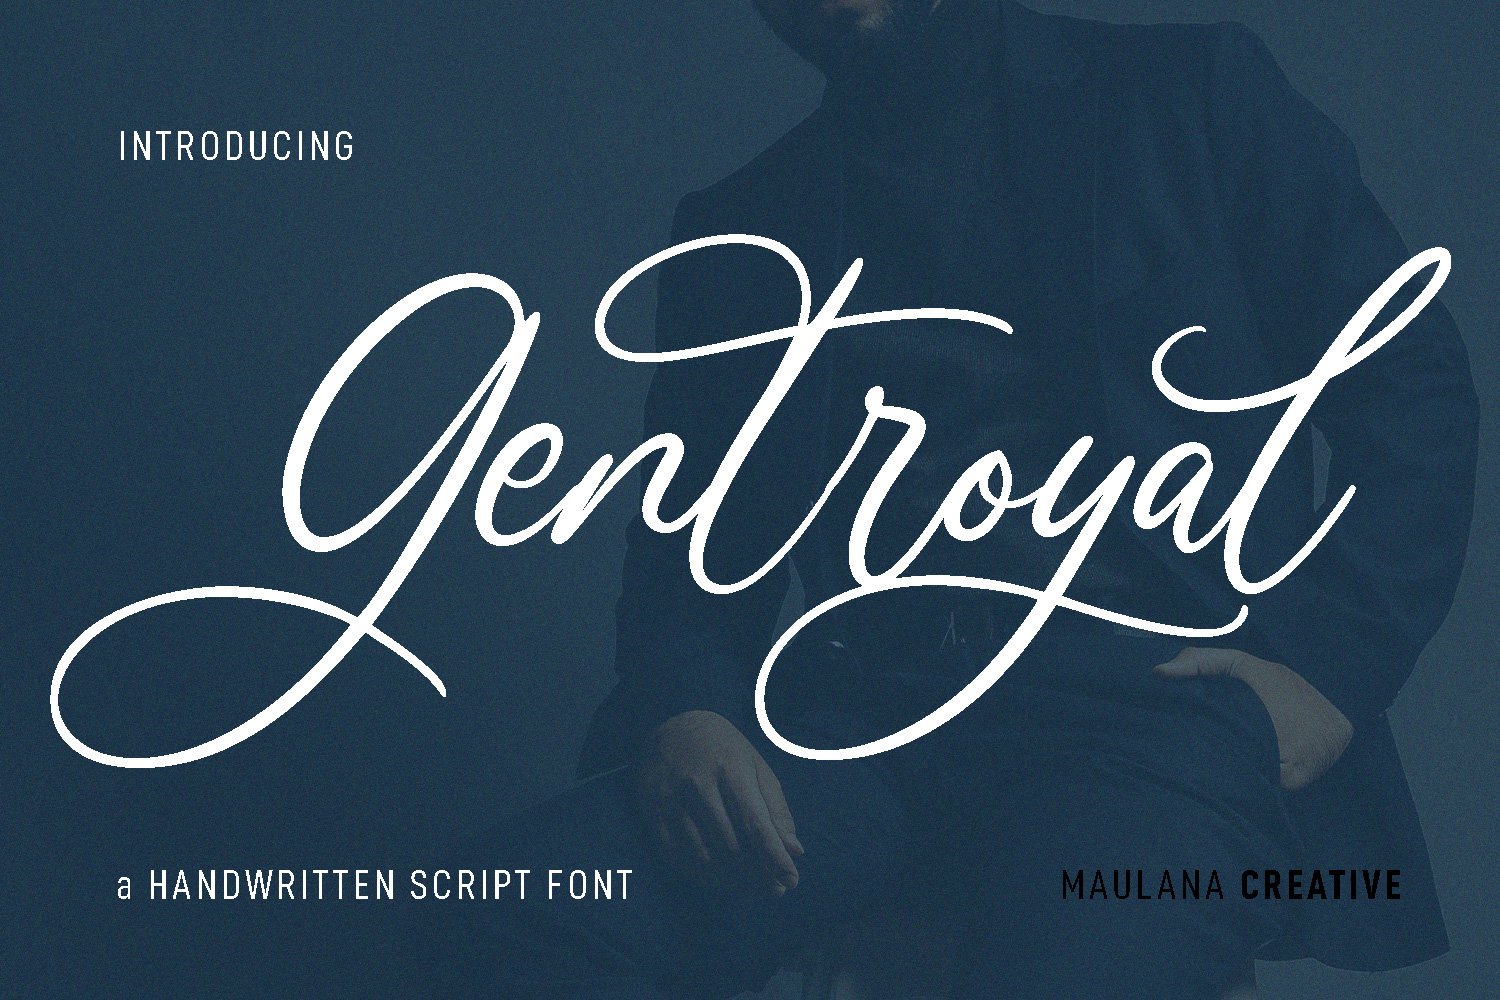 Gentroyal Script Font cover image.